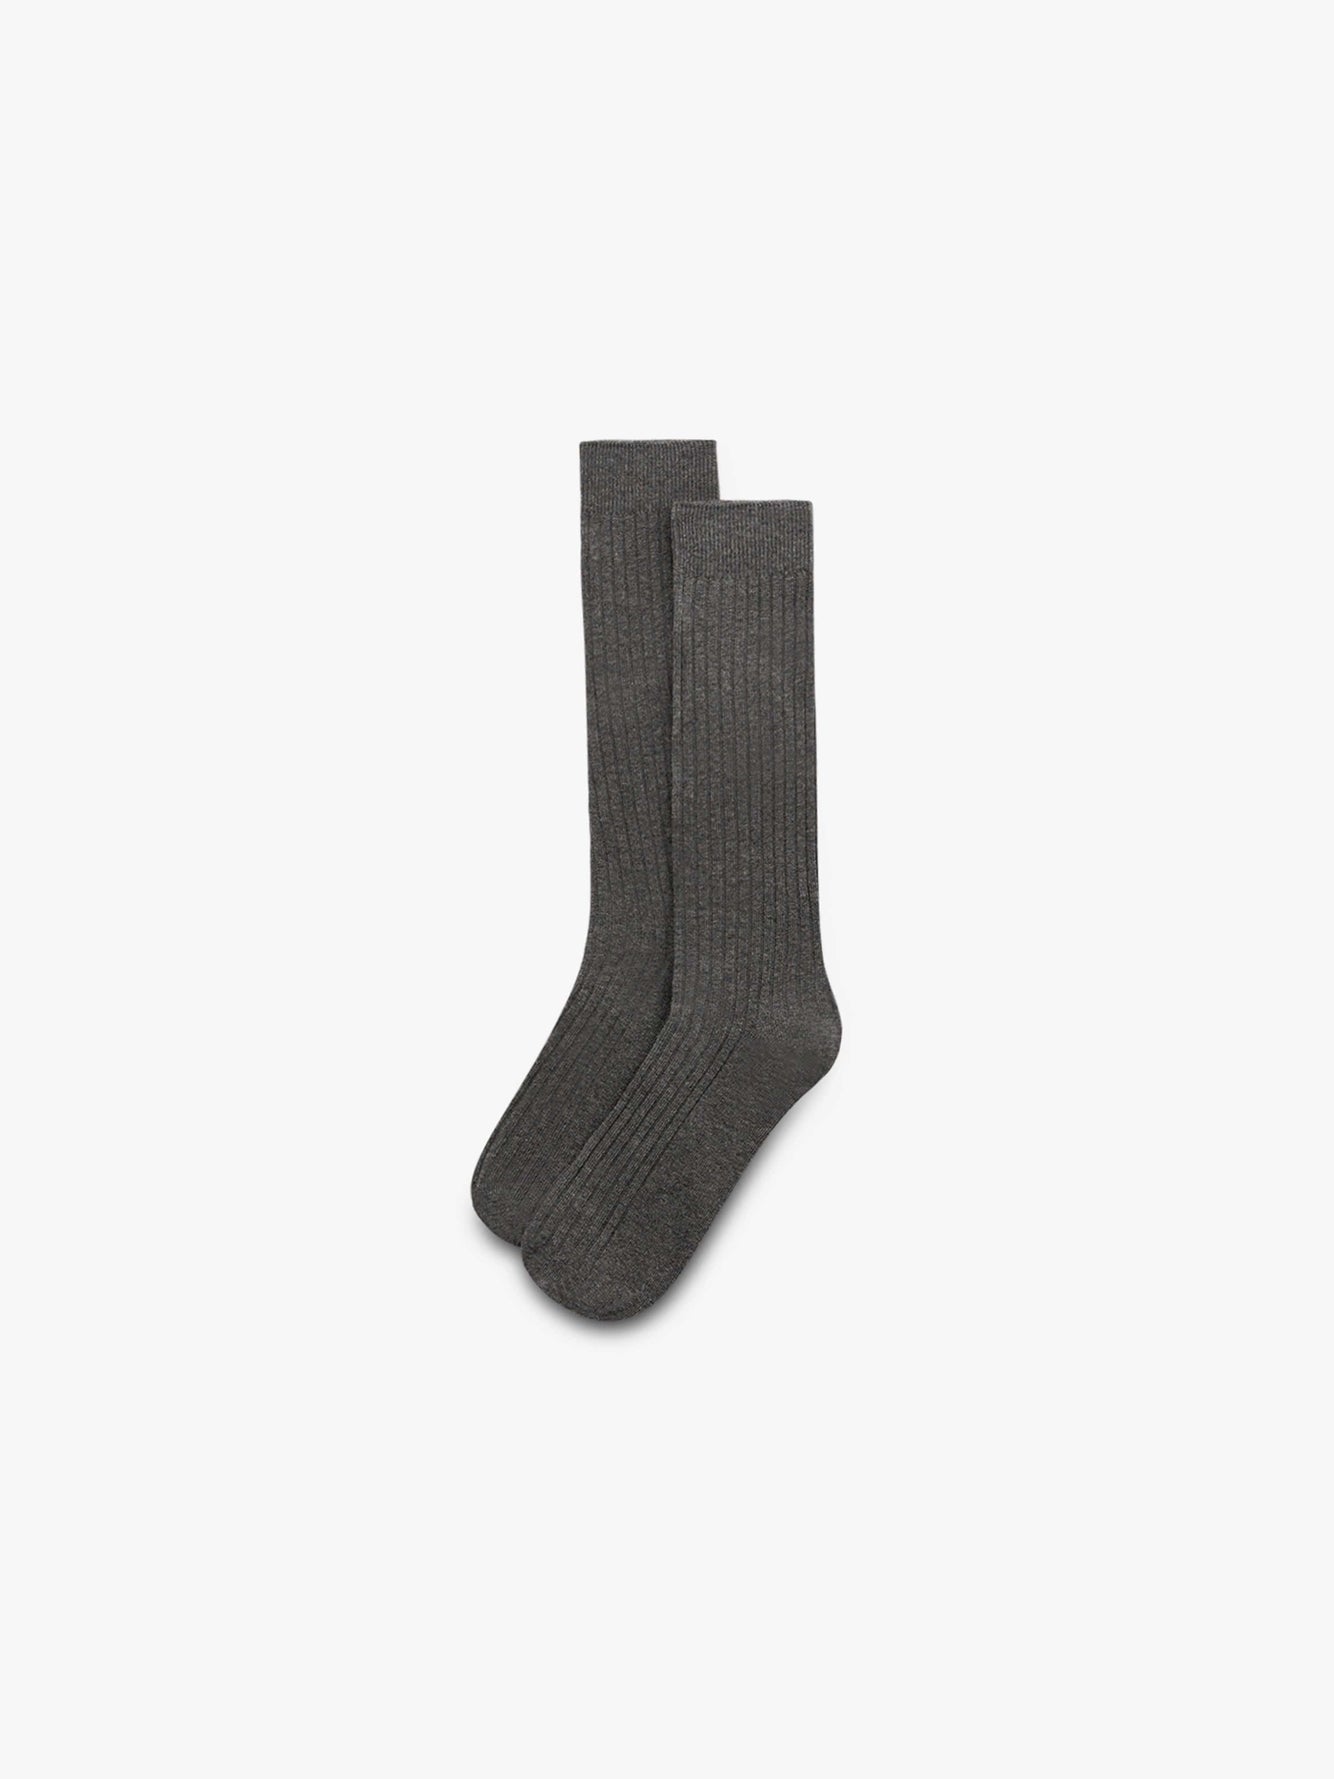 Grey Ribbed Socks - Grand Le Mar